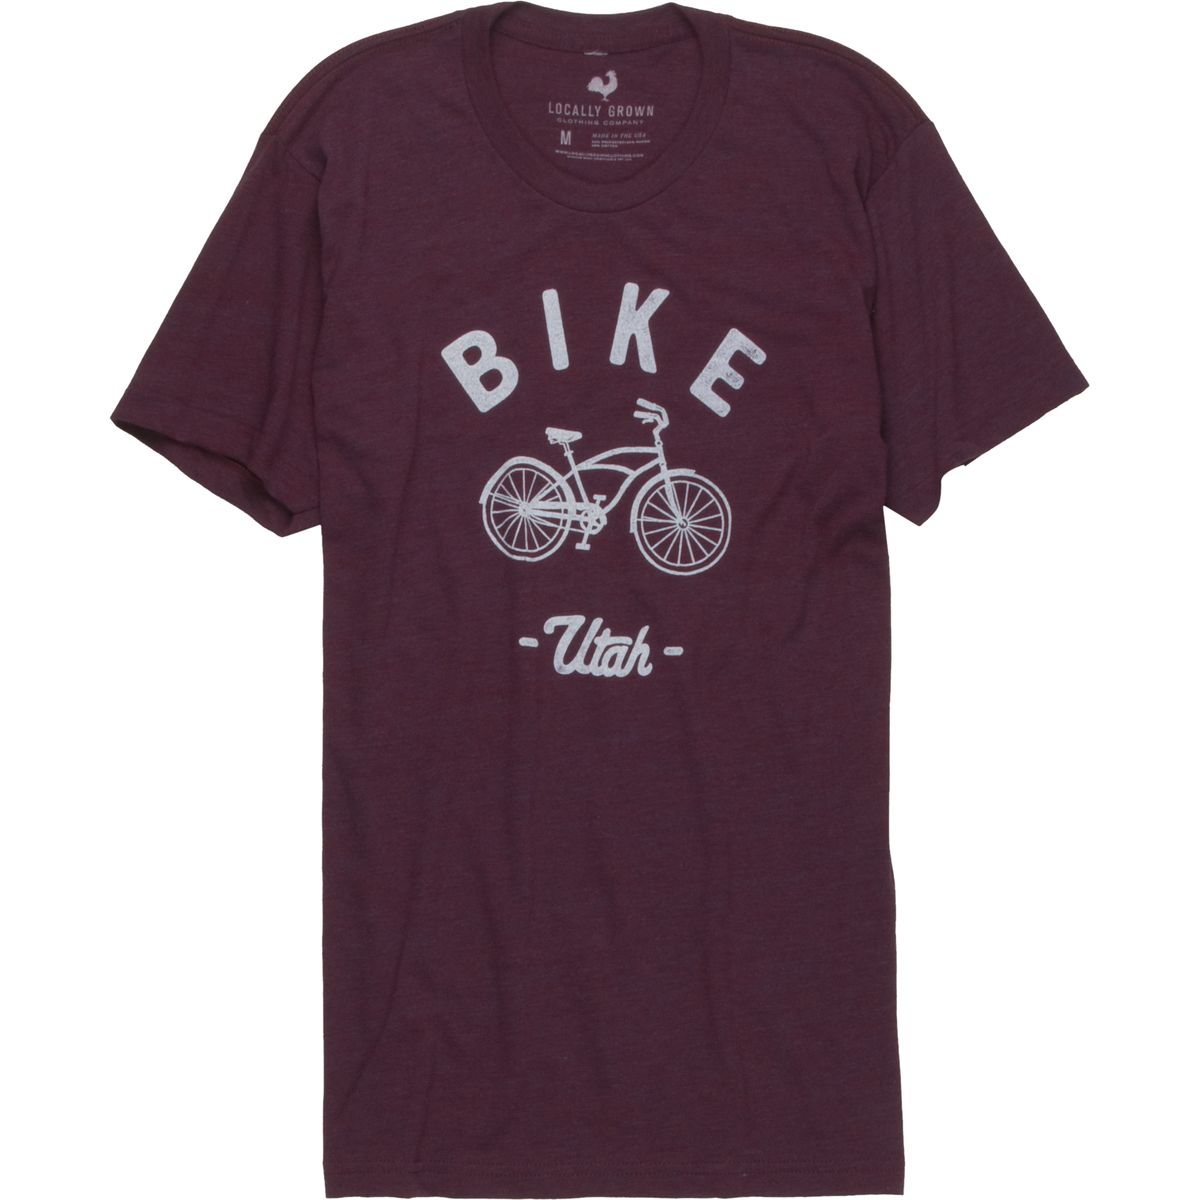 Locally Grown Bike Cruiser Utah Tri-Blend Vintage T-Shirt - Short-Sleeve - Men's Heather Cran/White, M